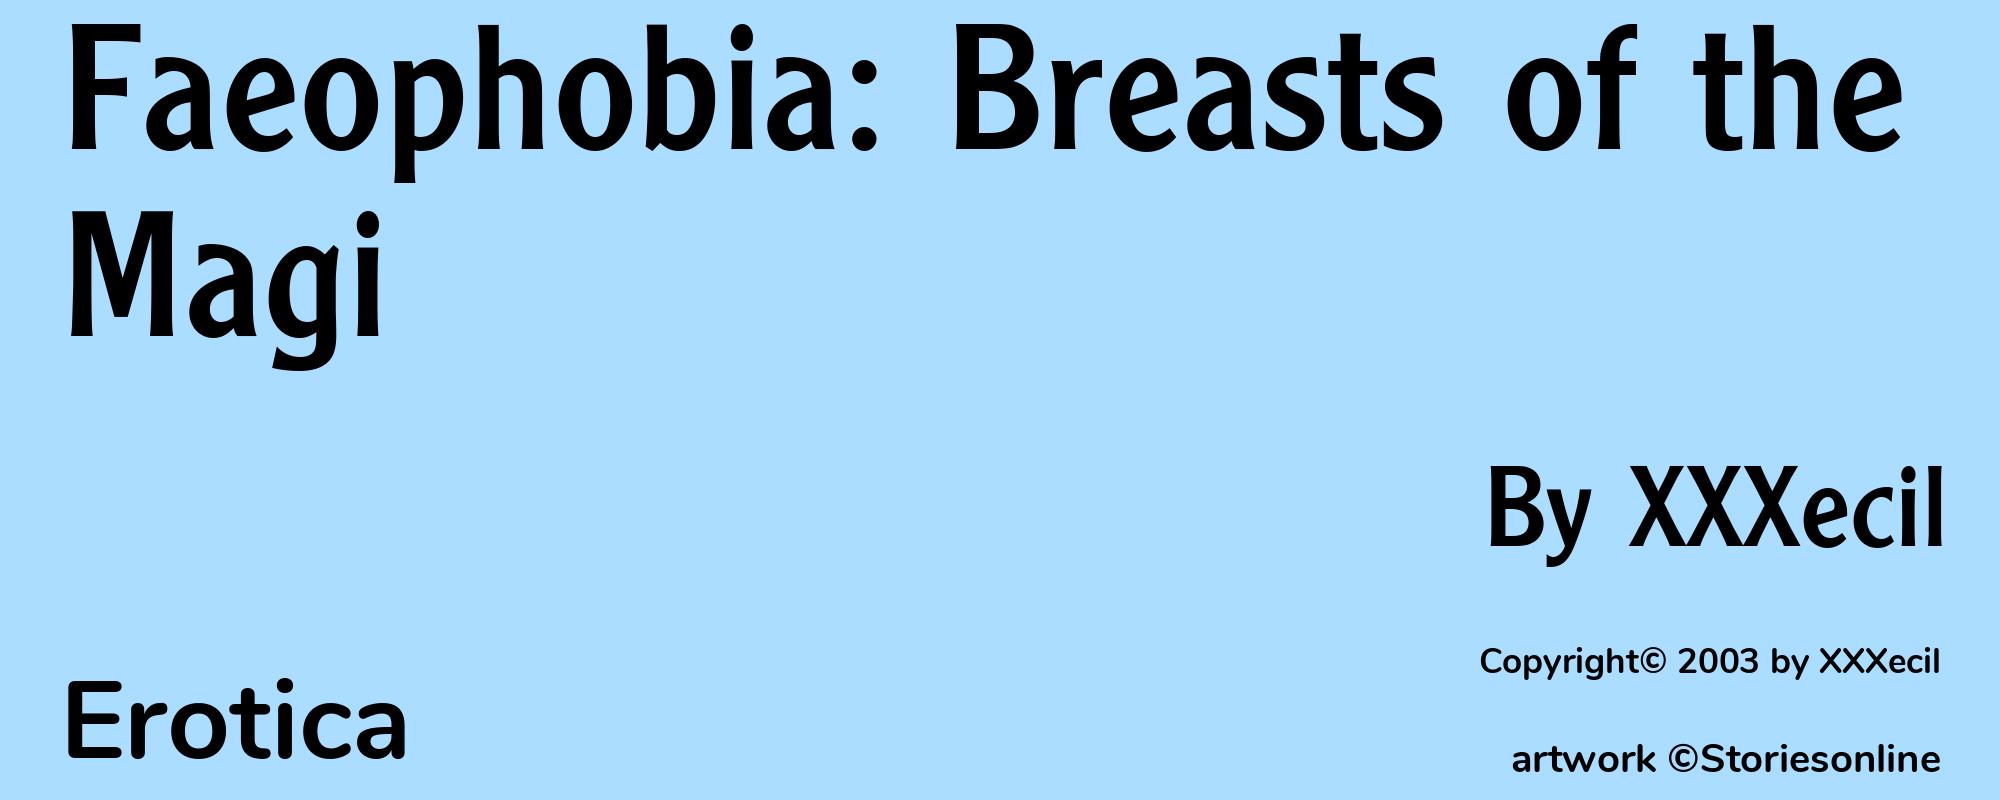 Faeophobia: Breasts of the Magi - Cover